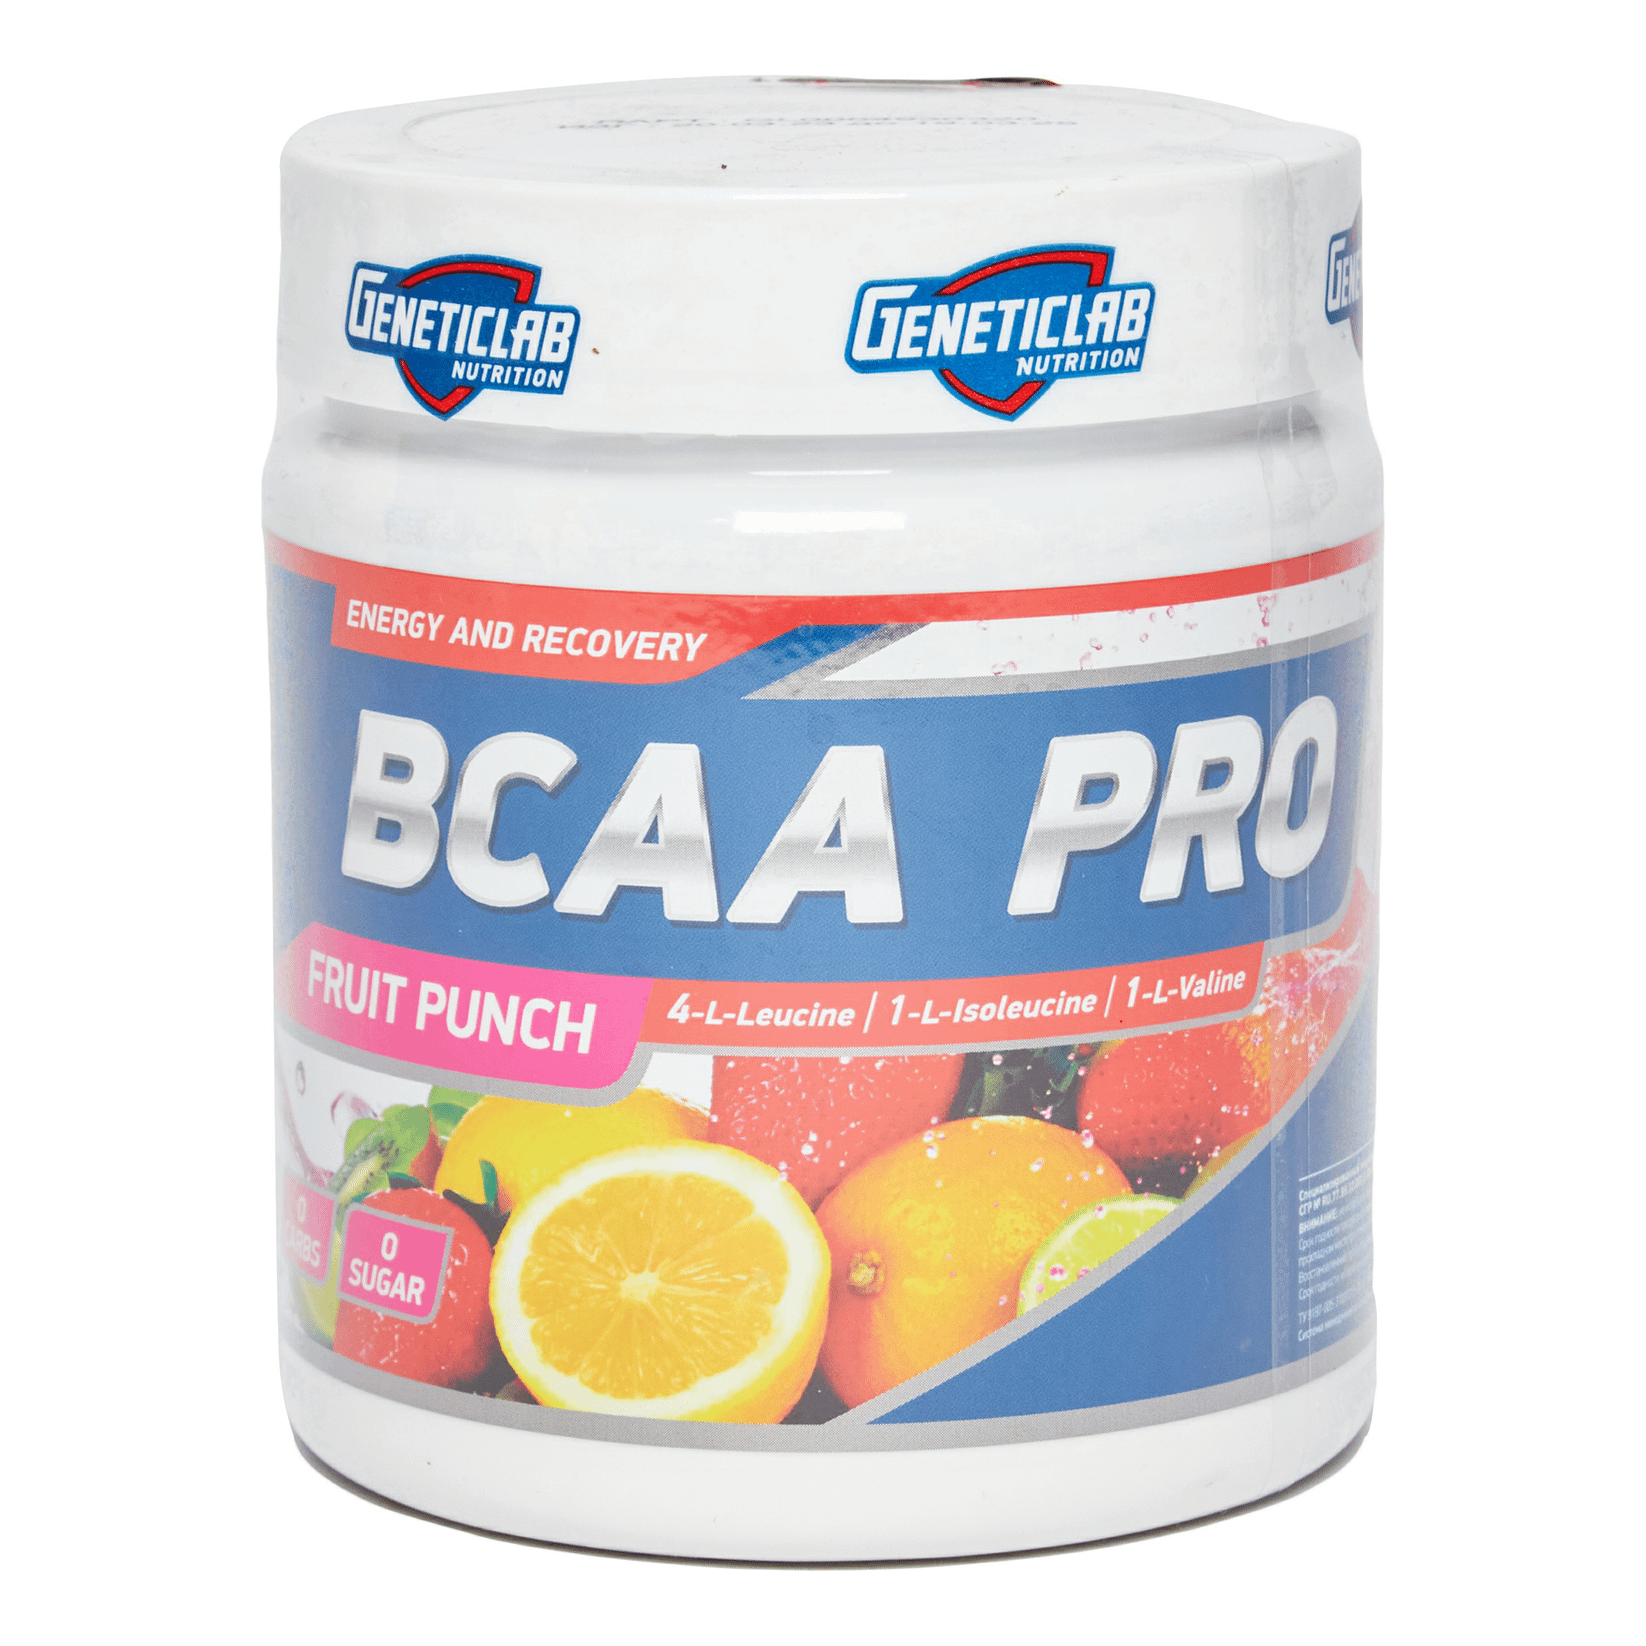 GeneticLab Nutrition Pro BCAA 250 г, фруктовый пунш